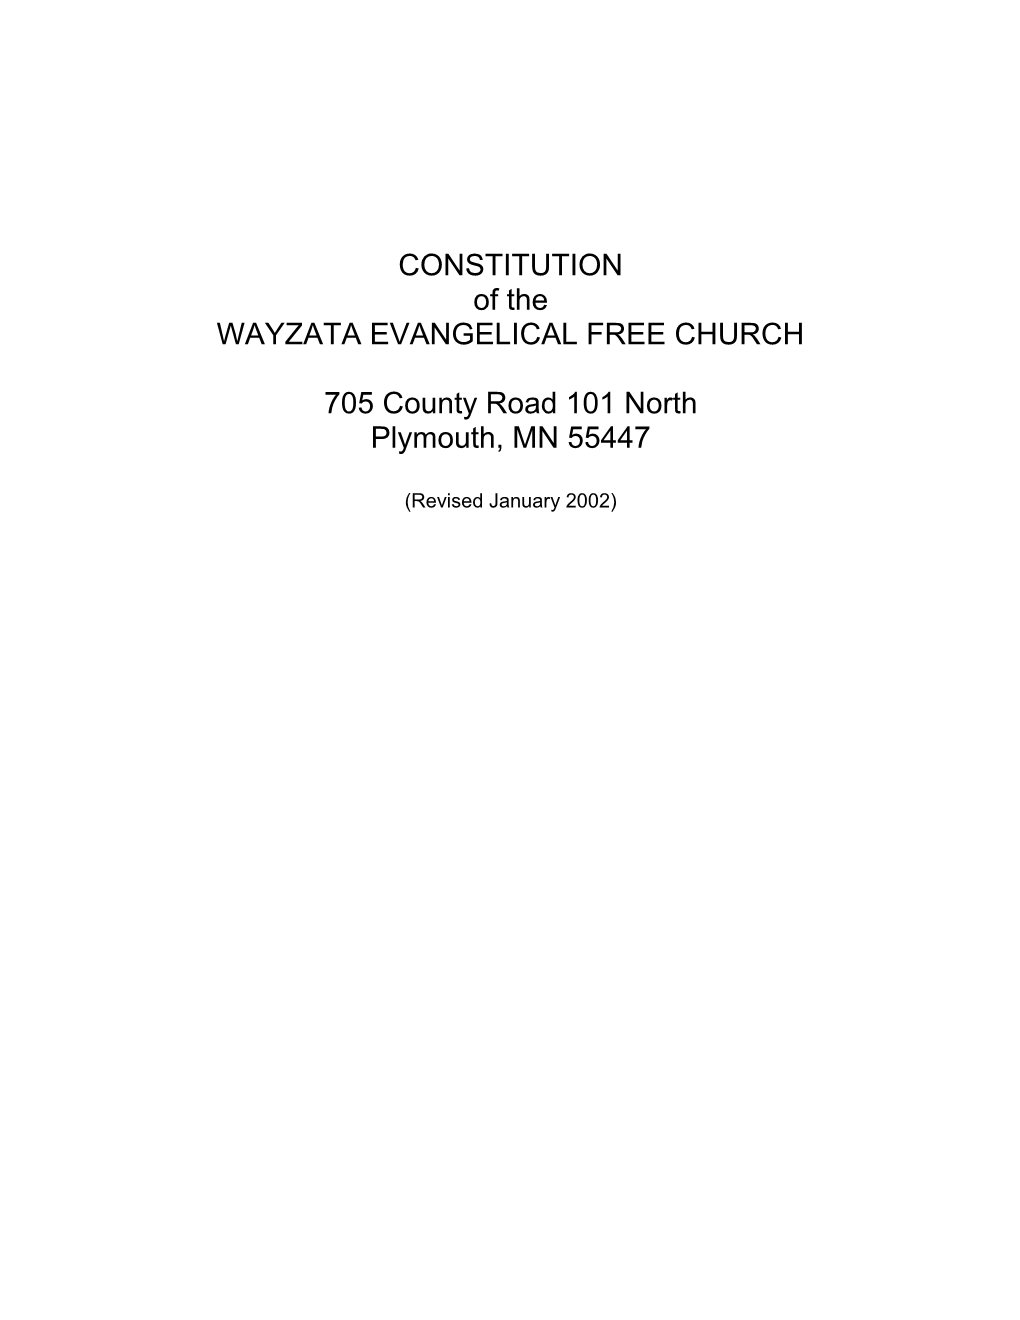 Wayzata Evangelical Free Church